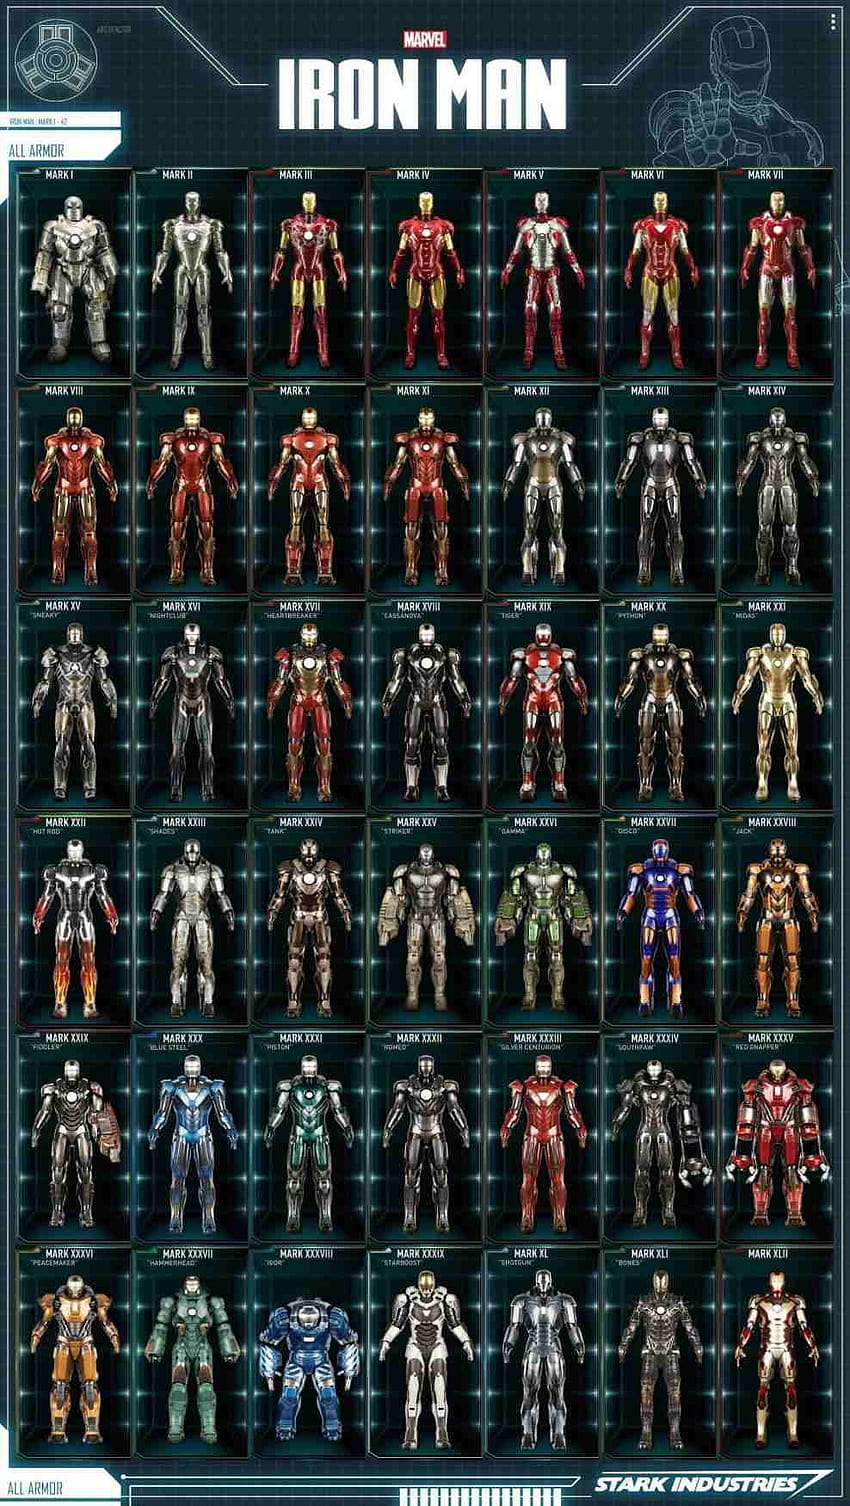 K Rhqwallscom X Iron Man Suits Names.jpg, wszystkie kombinezony Iron Man Tapeta na telefon HD